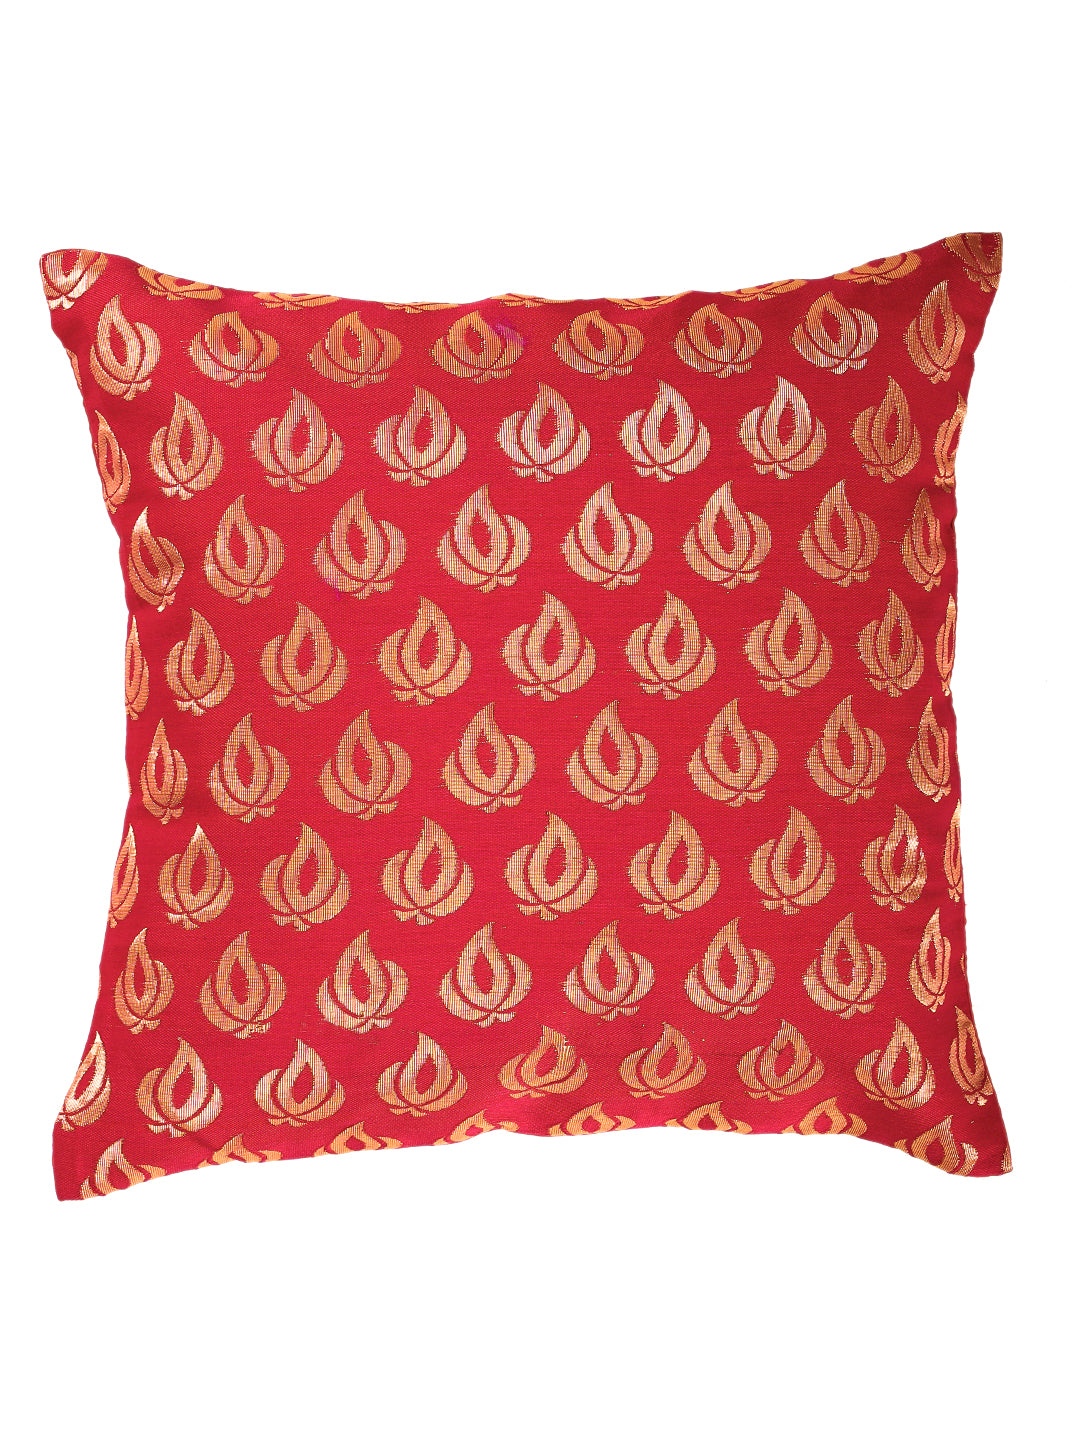 Silkfab Set 0f 5 Decorative Silk Cushion Covers (16x16) Flame Red - SILKFAB